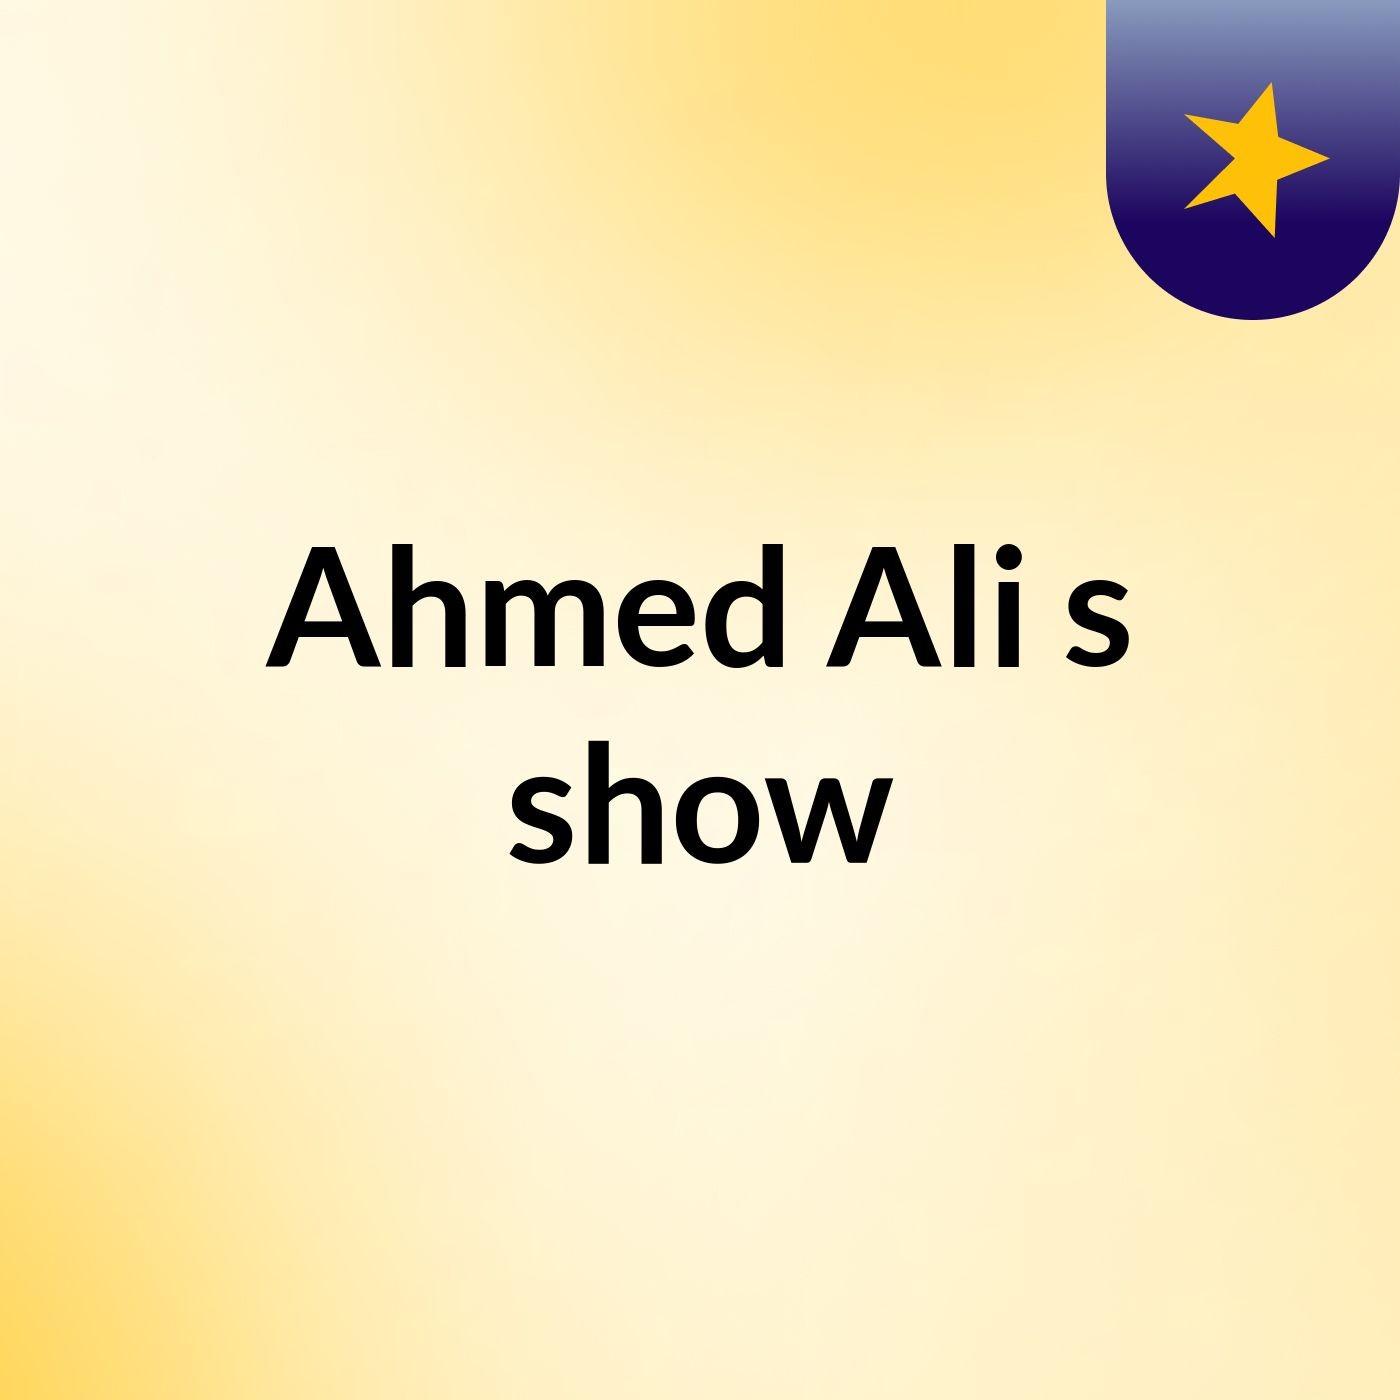 Ahmed Ali's show